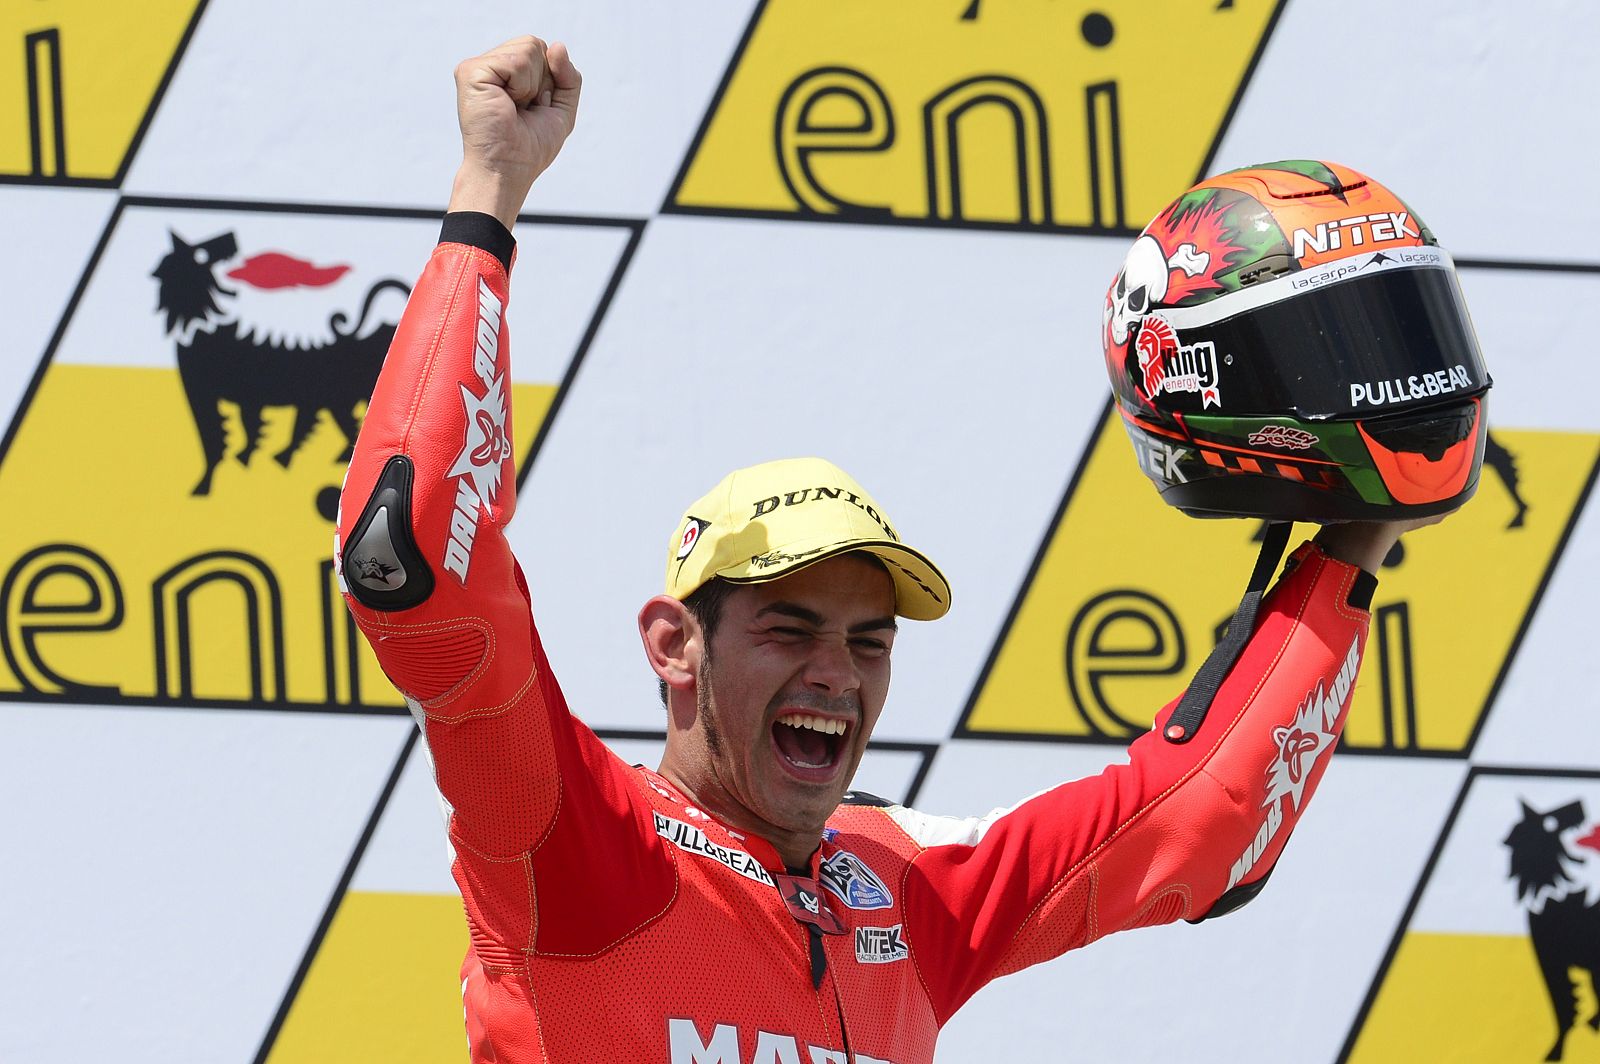 Primer triunfo para el piloto de Moto2 Jordi Torres